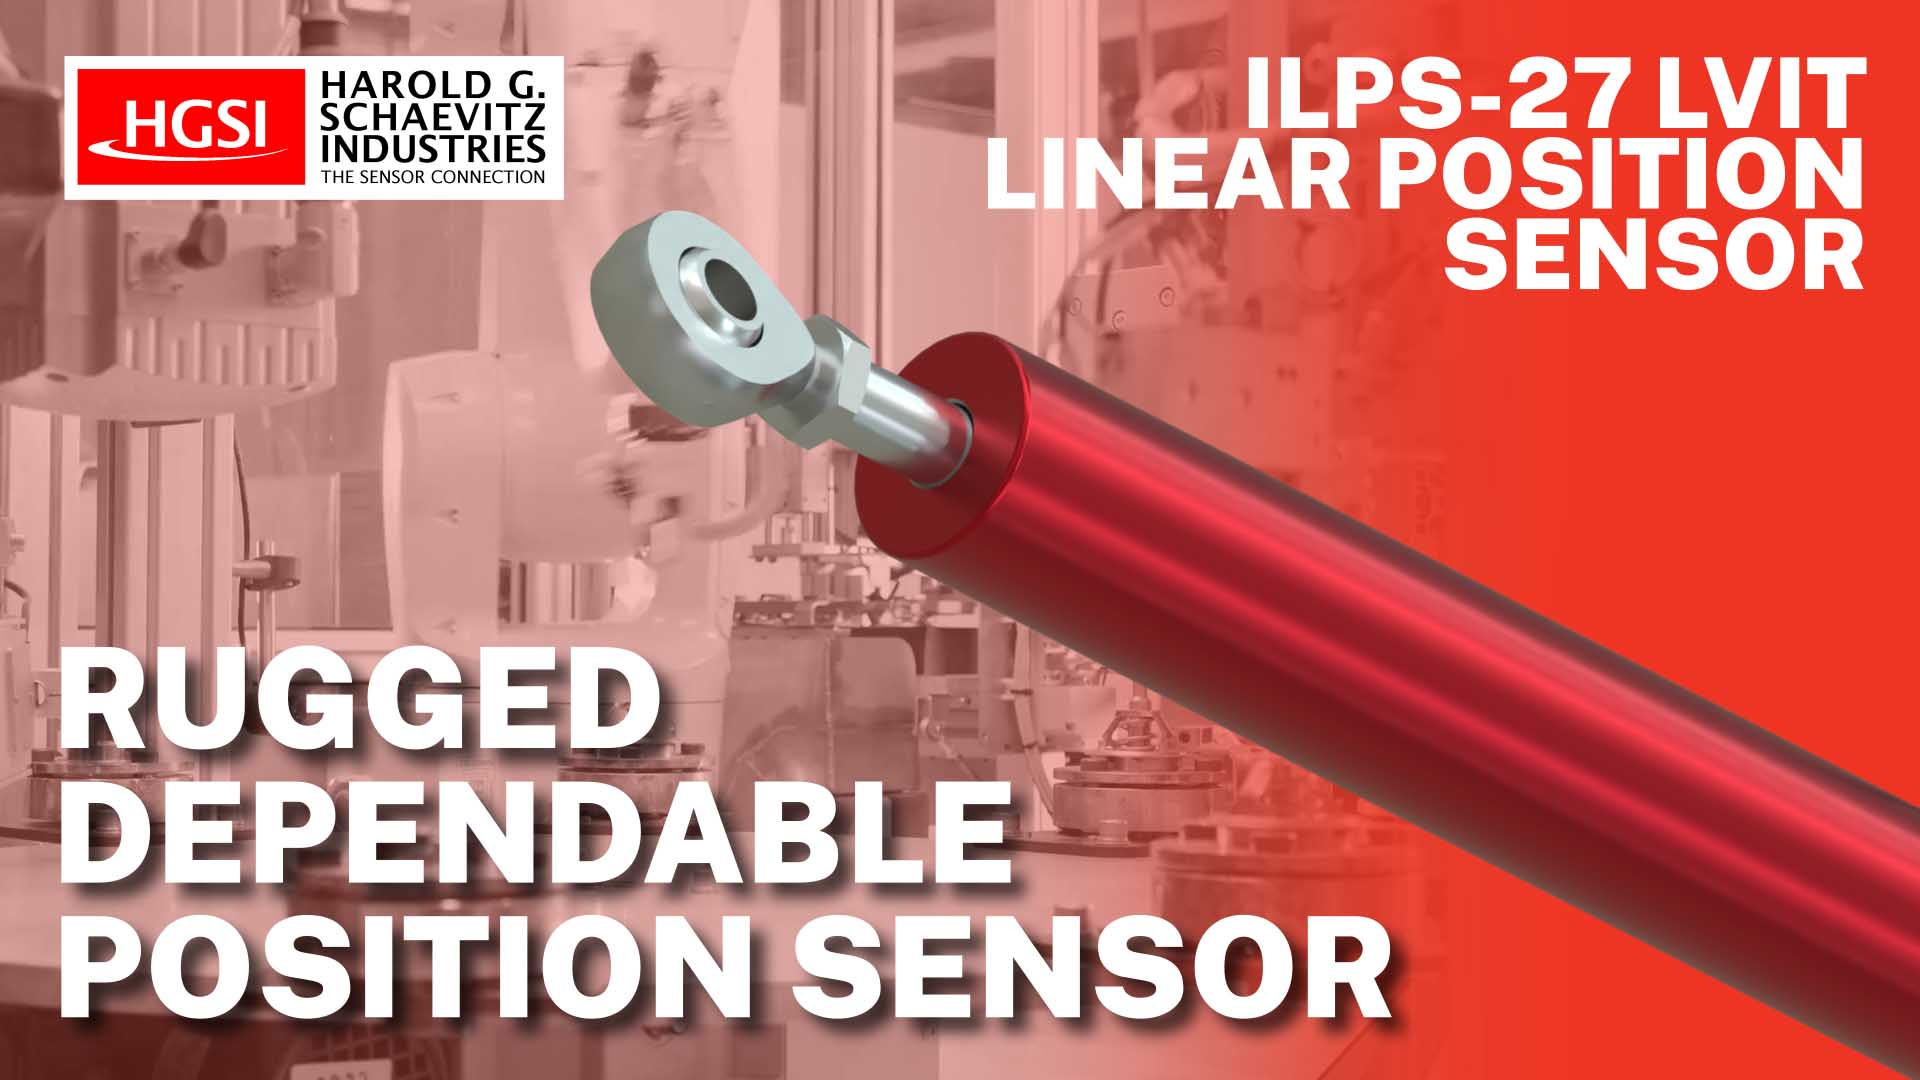 Overview of ILPS-27 Series LVIT Linear Position Sensor